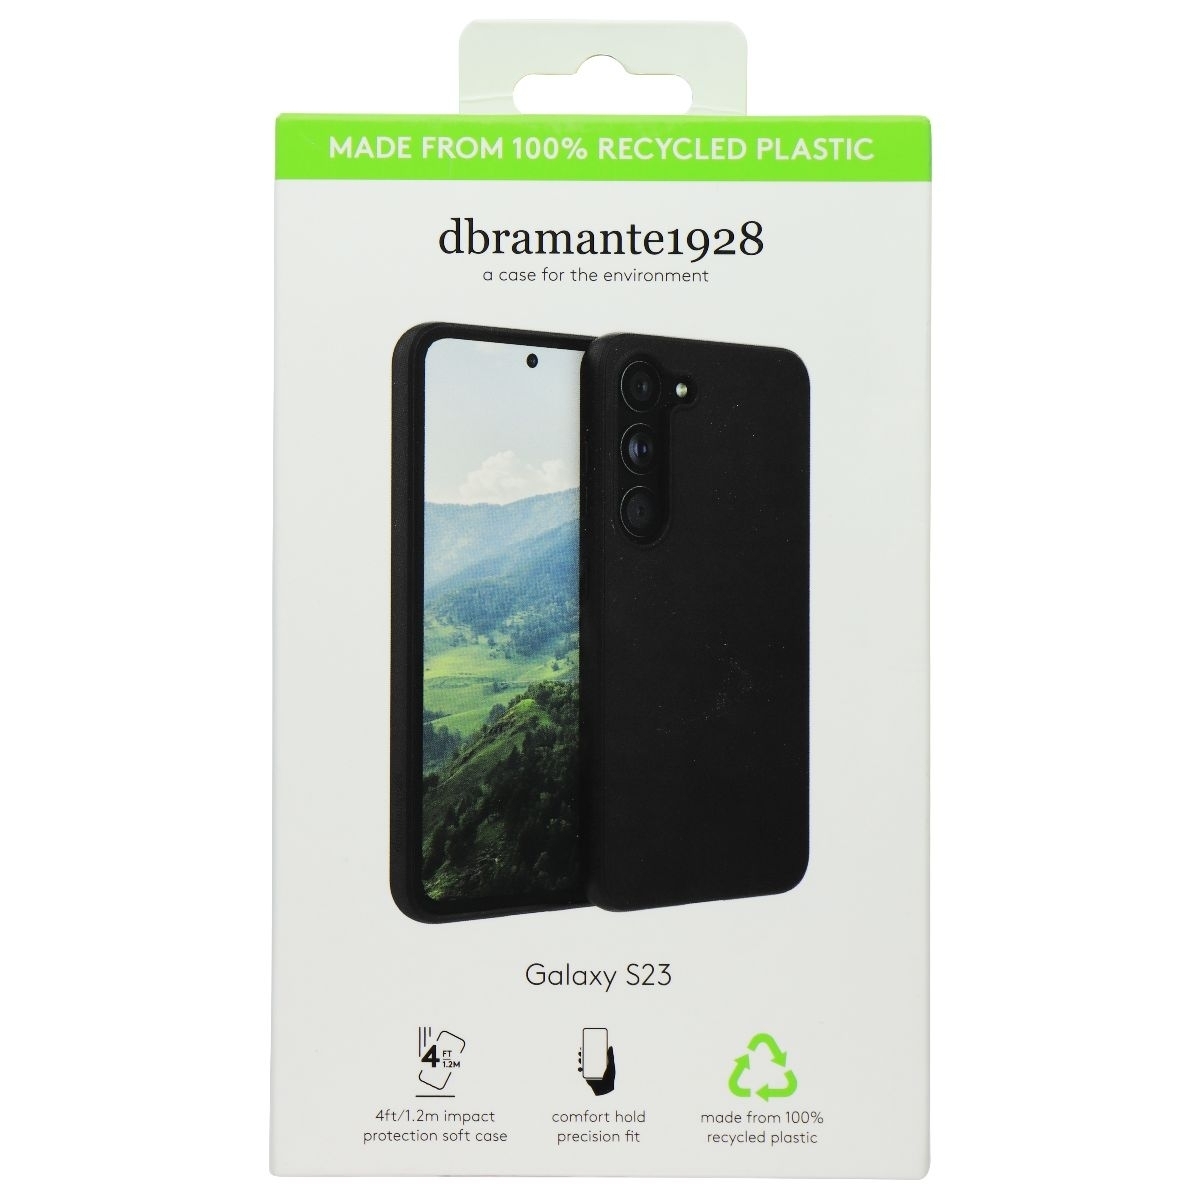 Dbramante1928 Phone Case For Samsung Galaxy S23 - Black (Refurbished)